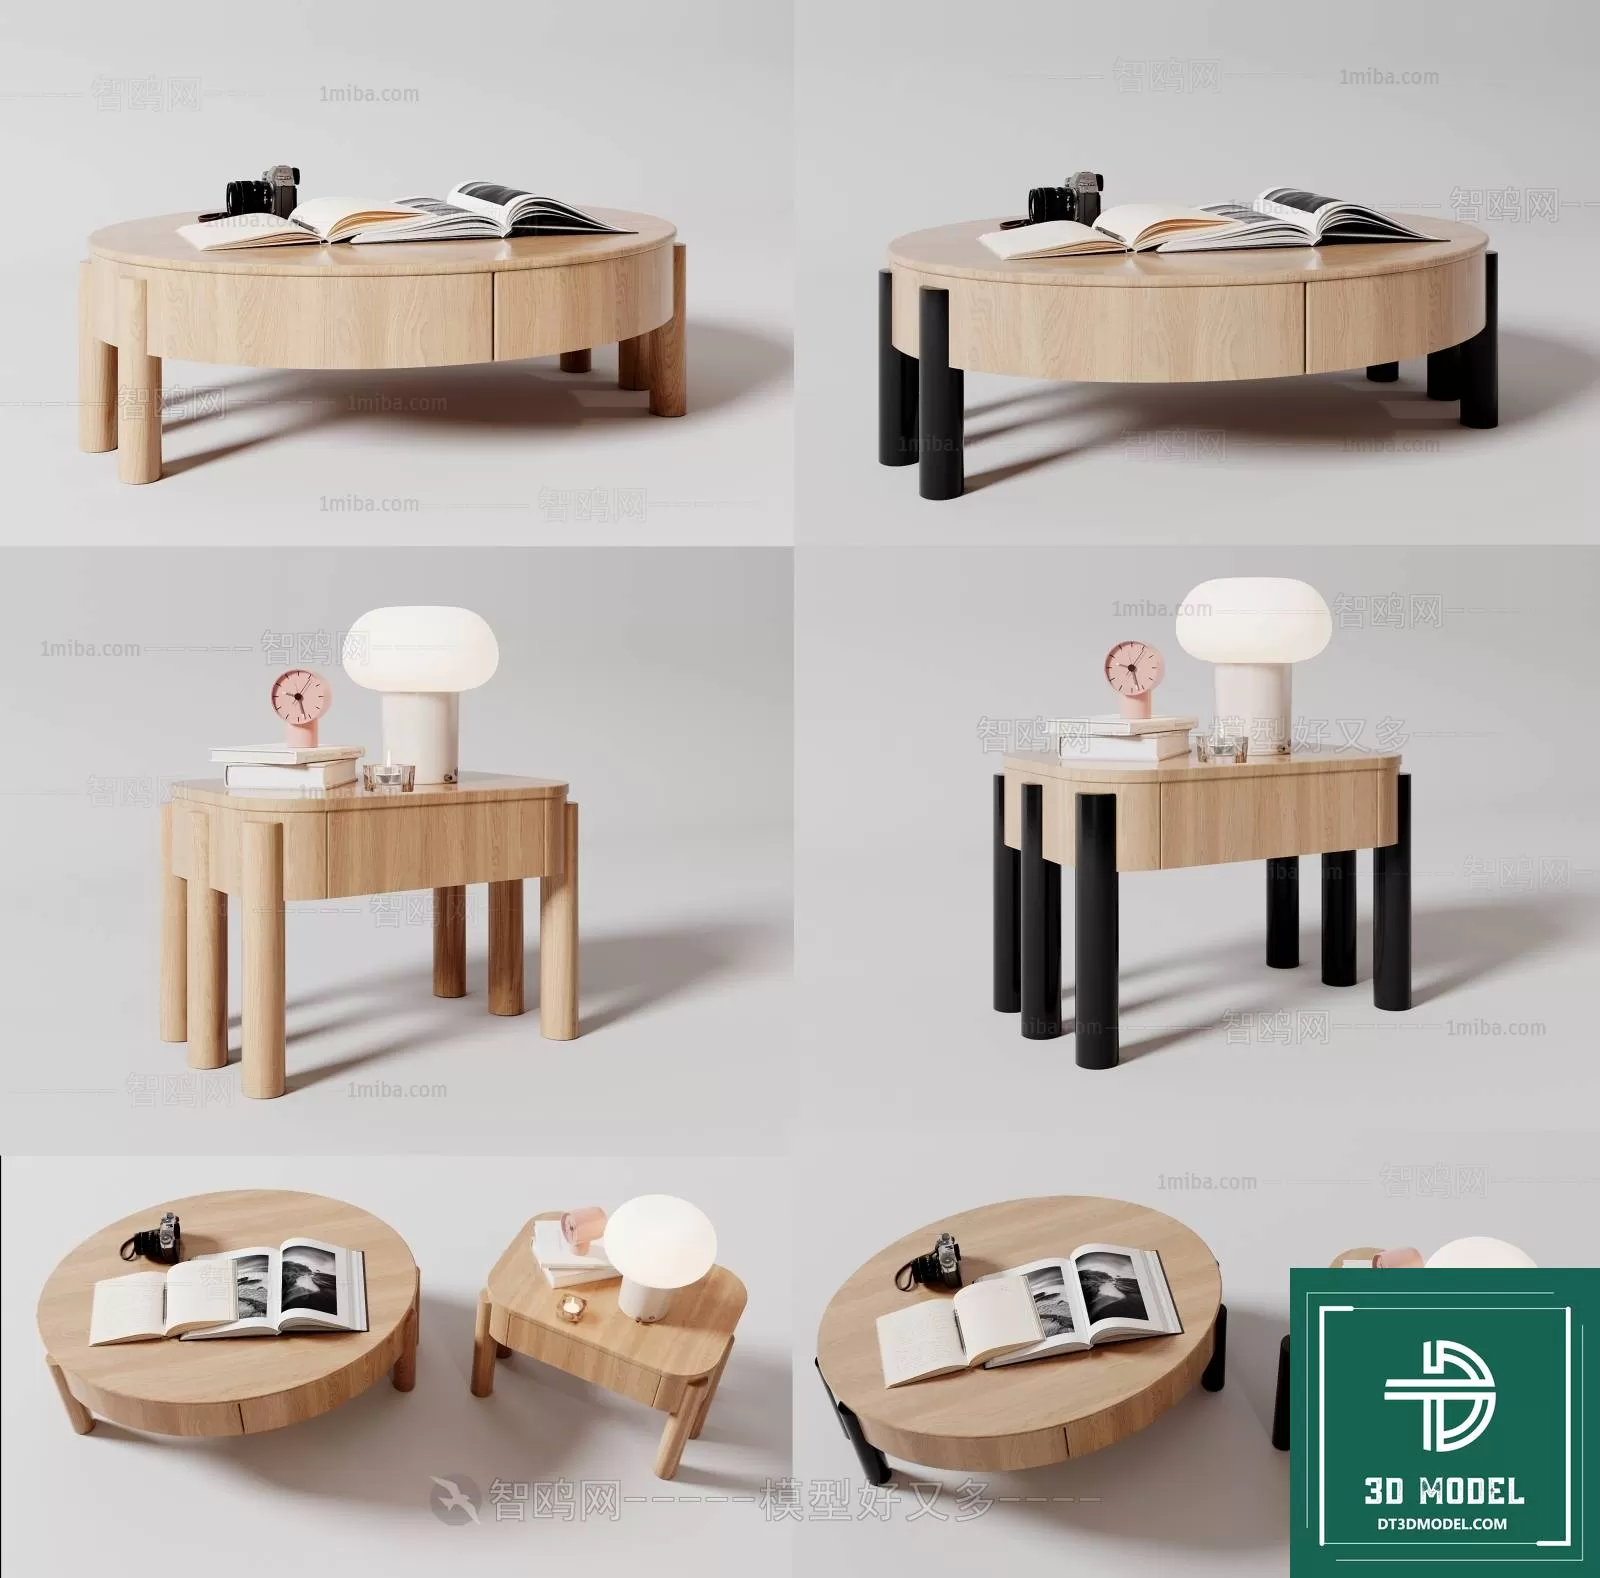 TEA TABLE – SOFA TABLE – 3D MODELS – 107